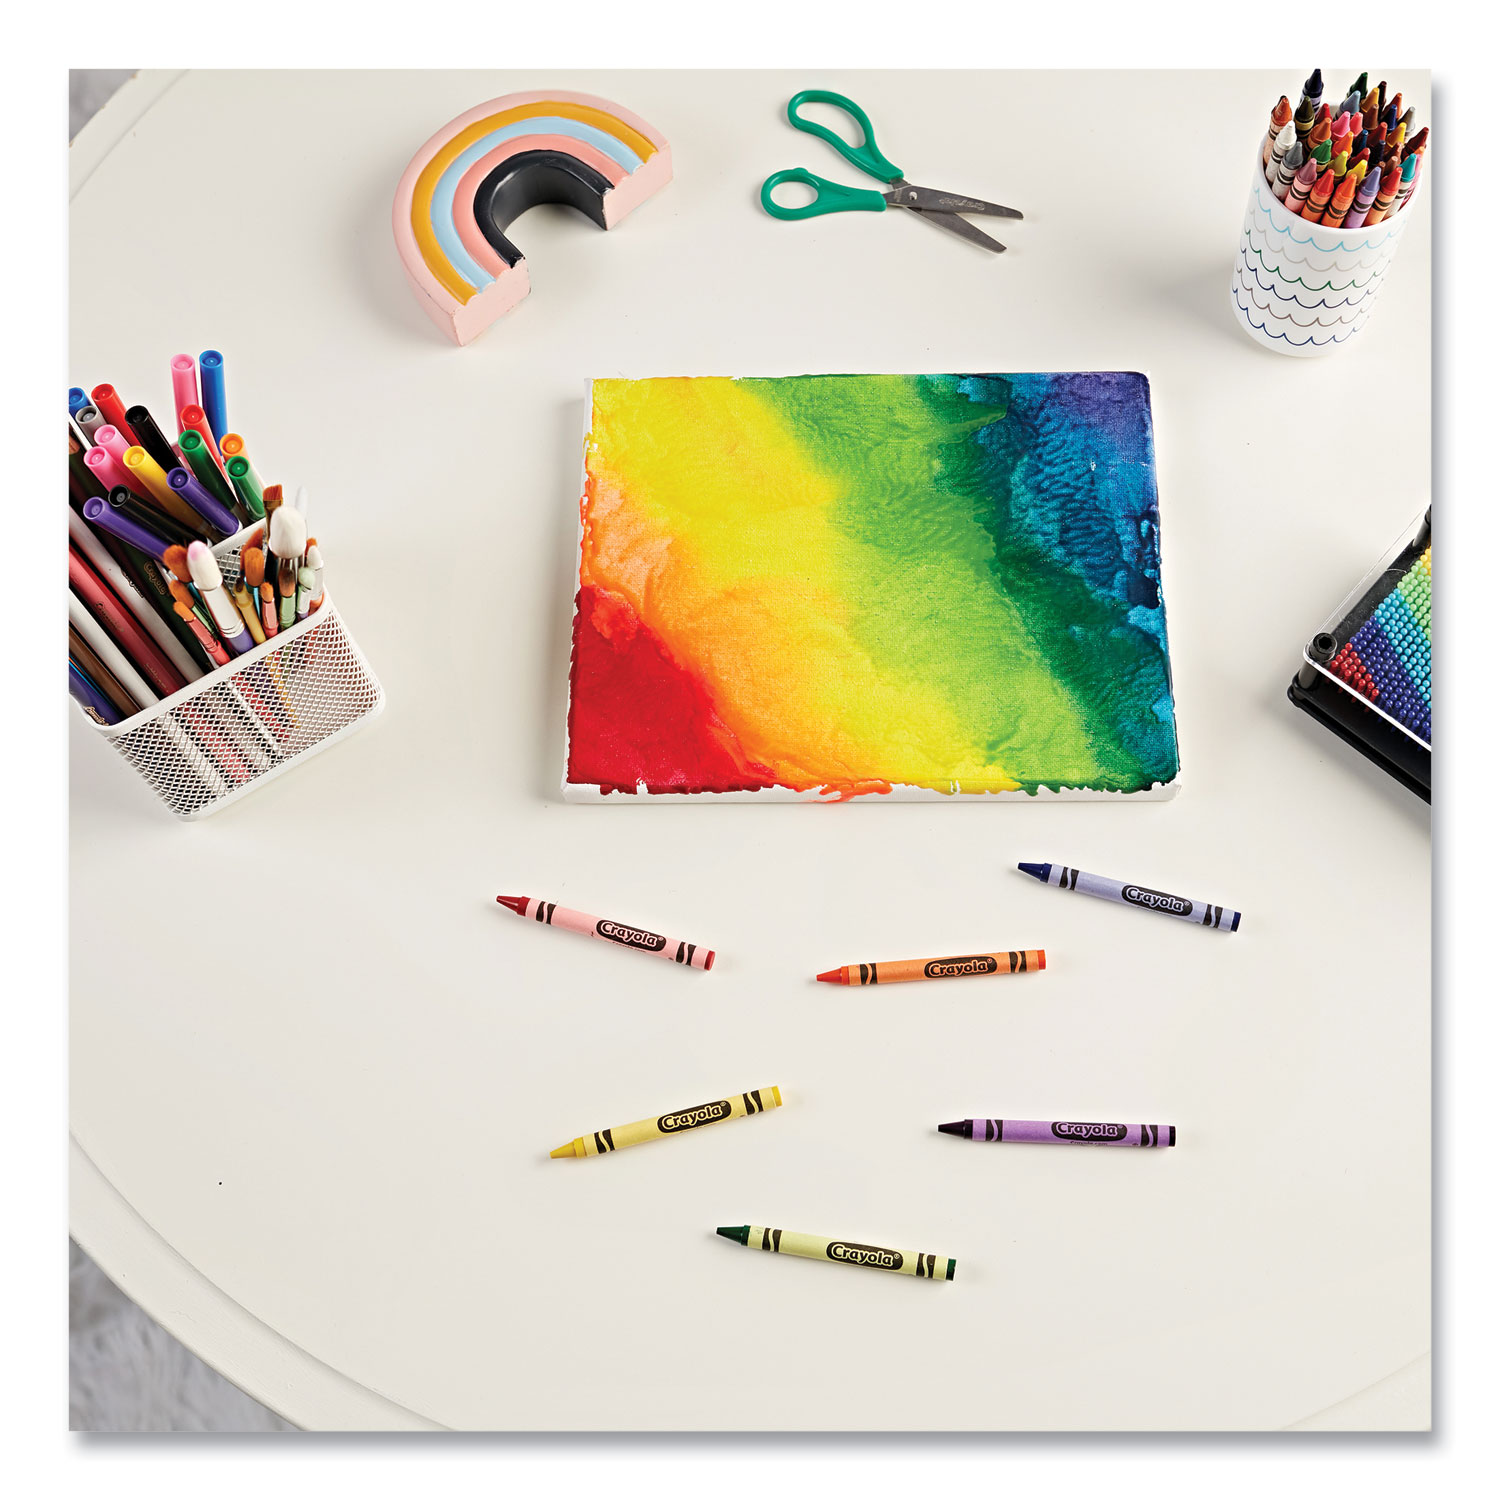 Crayola Llc Formerly Binney & Smith BIN530081 Watercolor Mixing